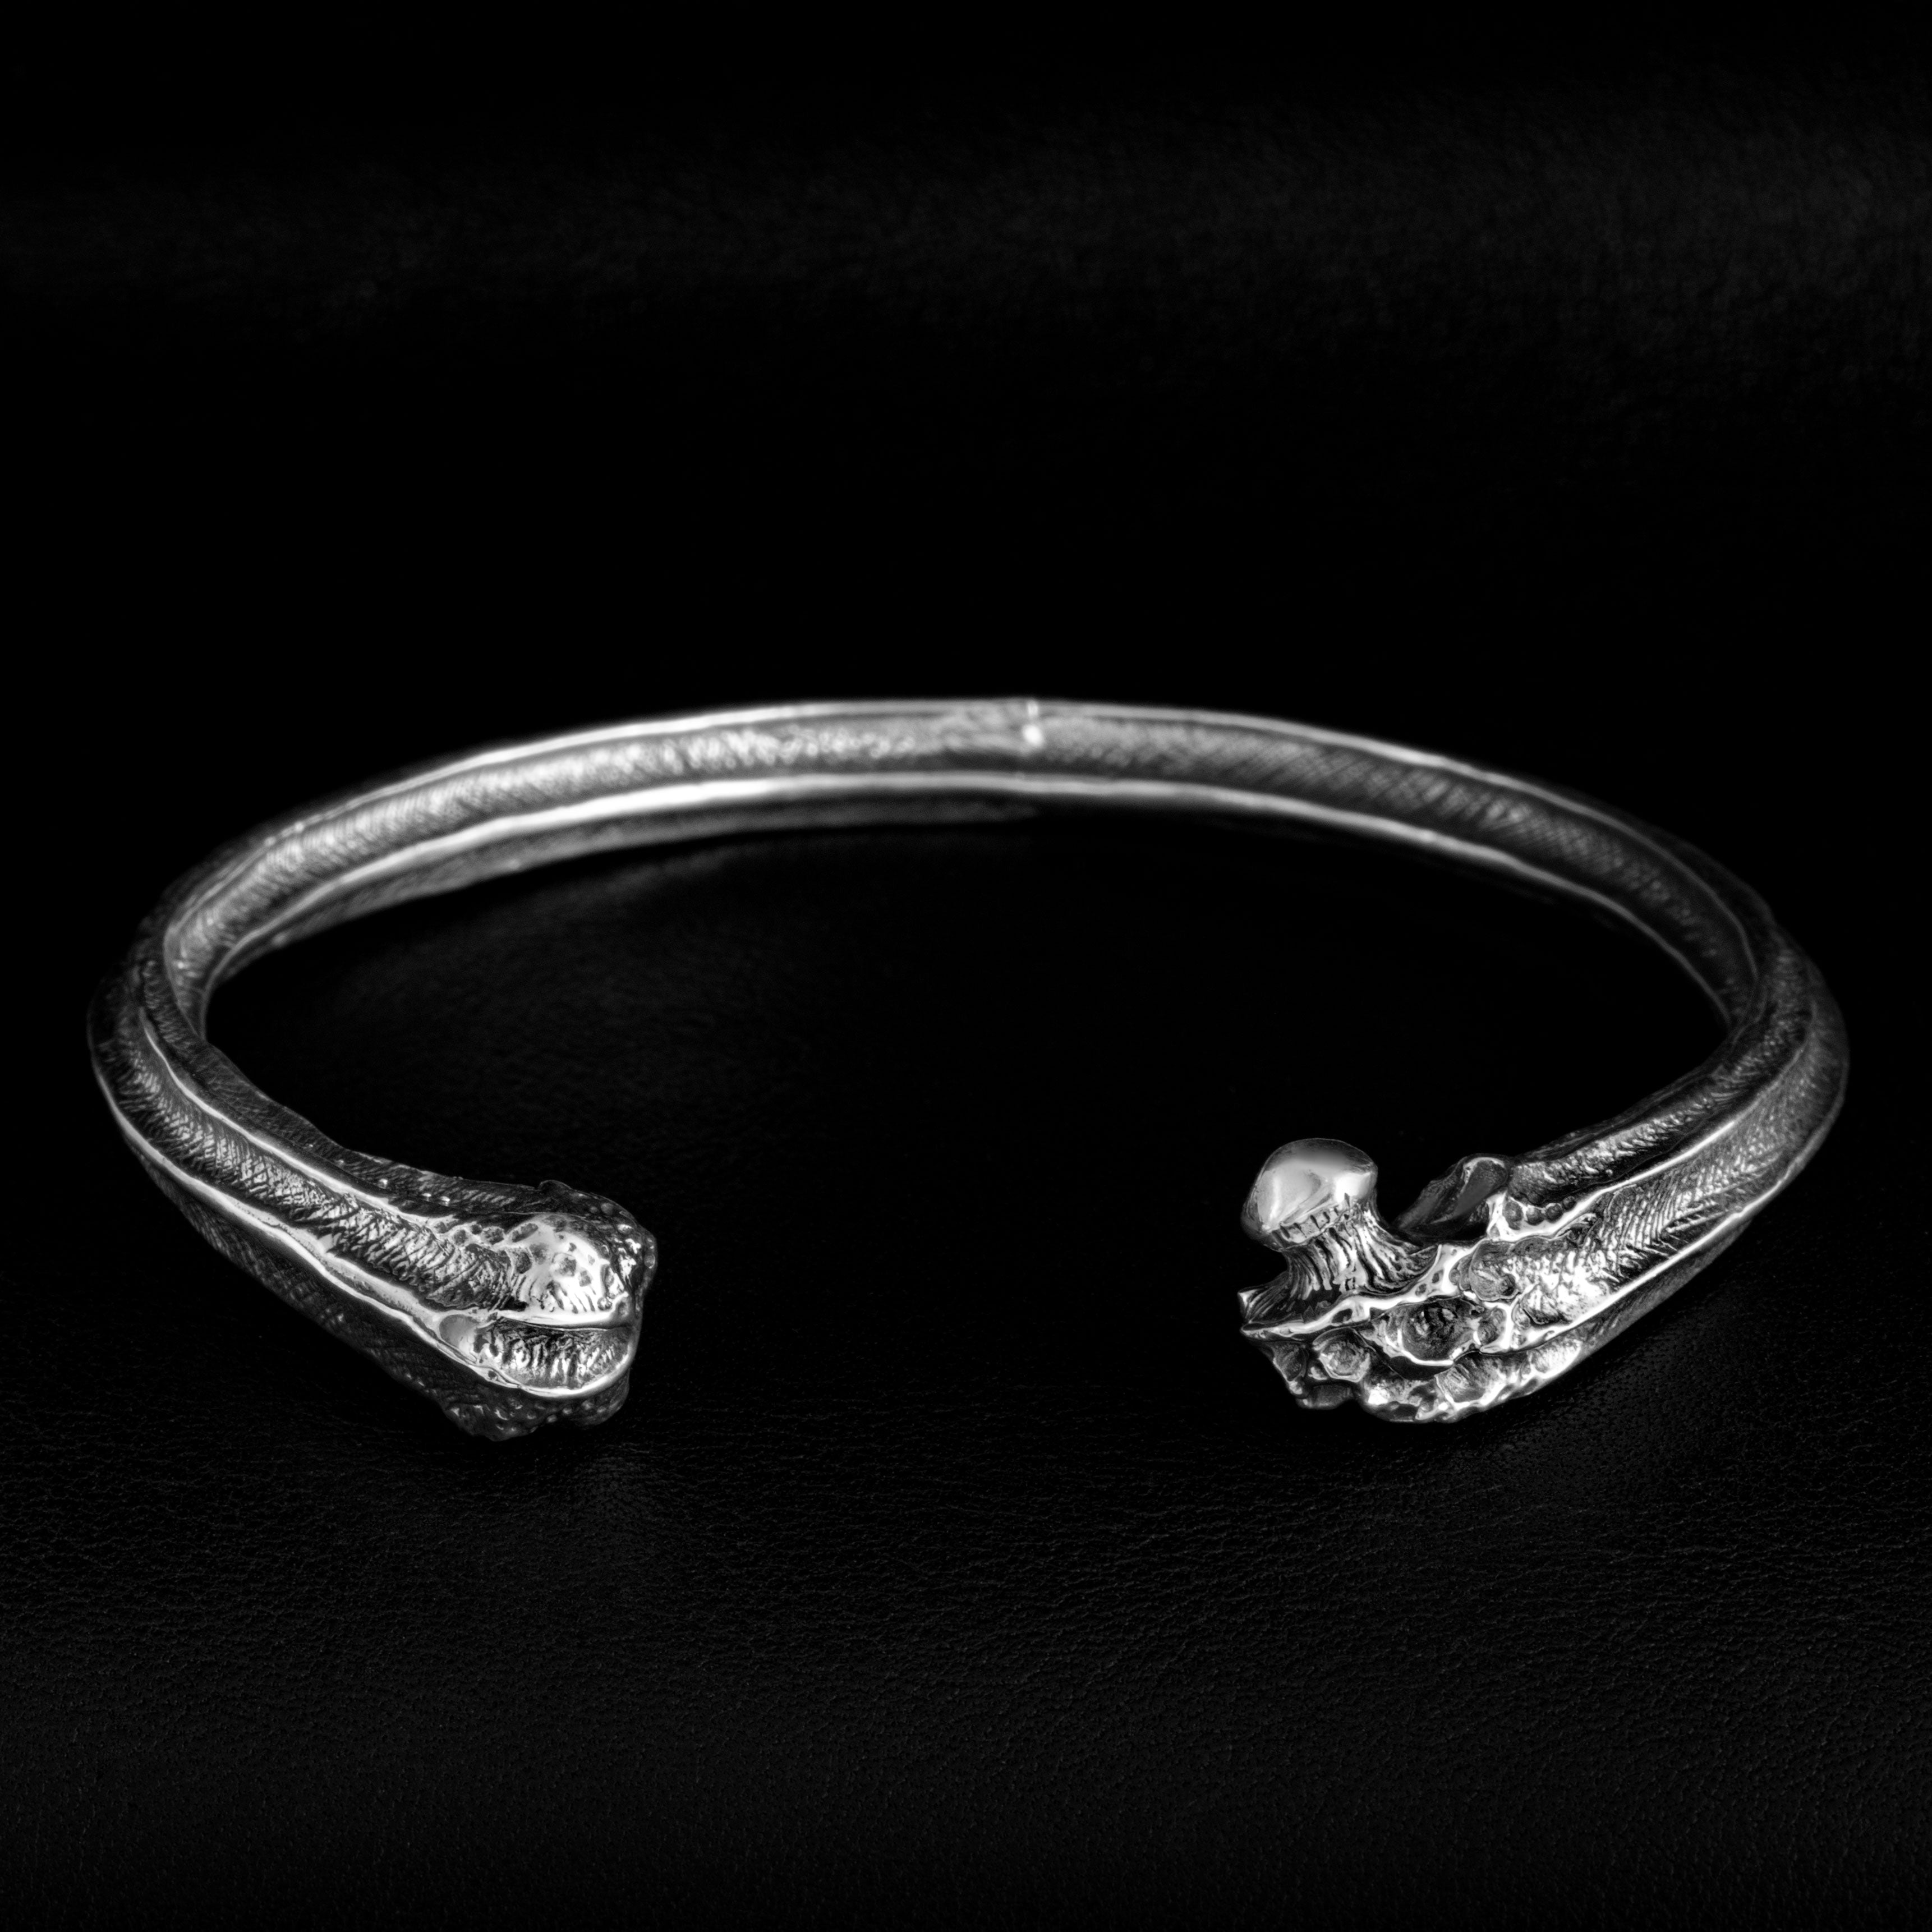 Femur Cuff Sterling Silver Bracelet